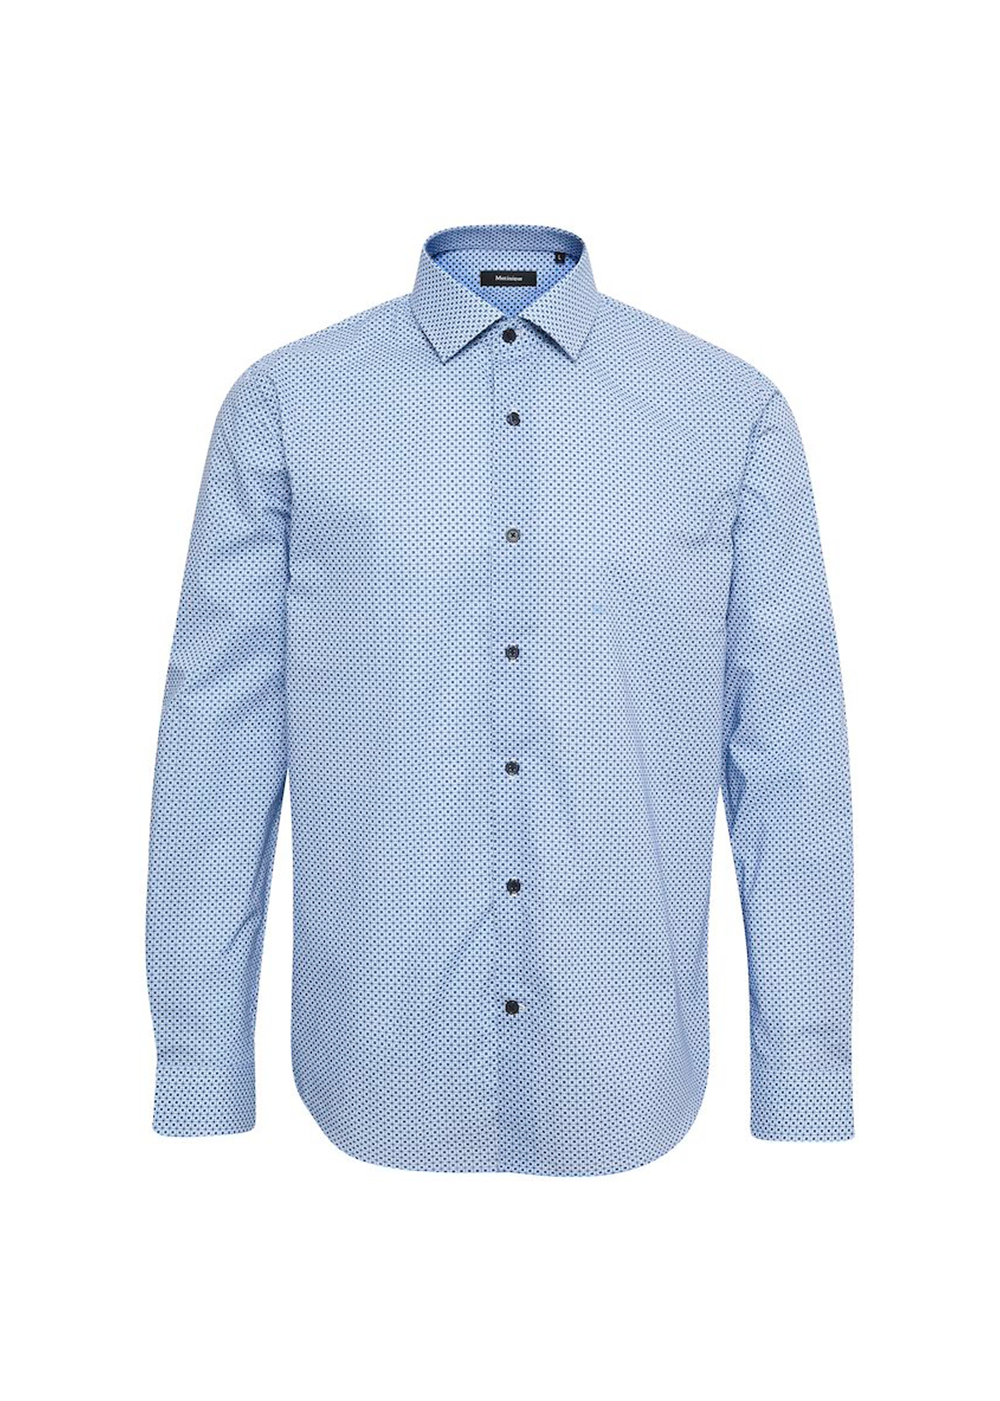 Trostol Shirt - Insignia Blue - Matinique Canada - Danali - 30207169